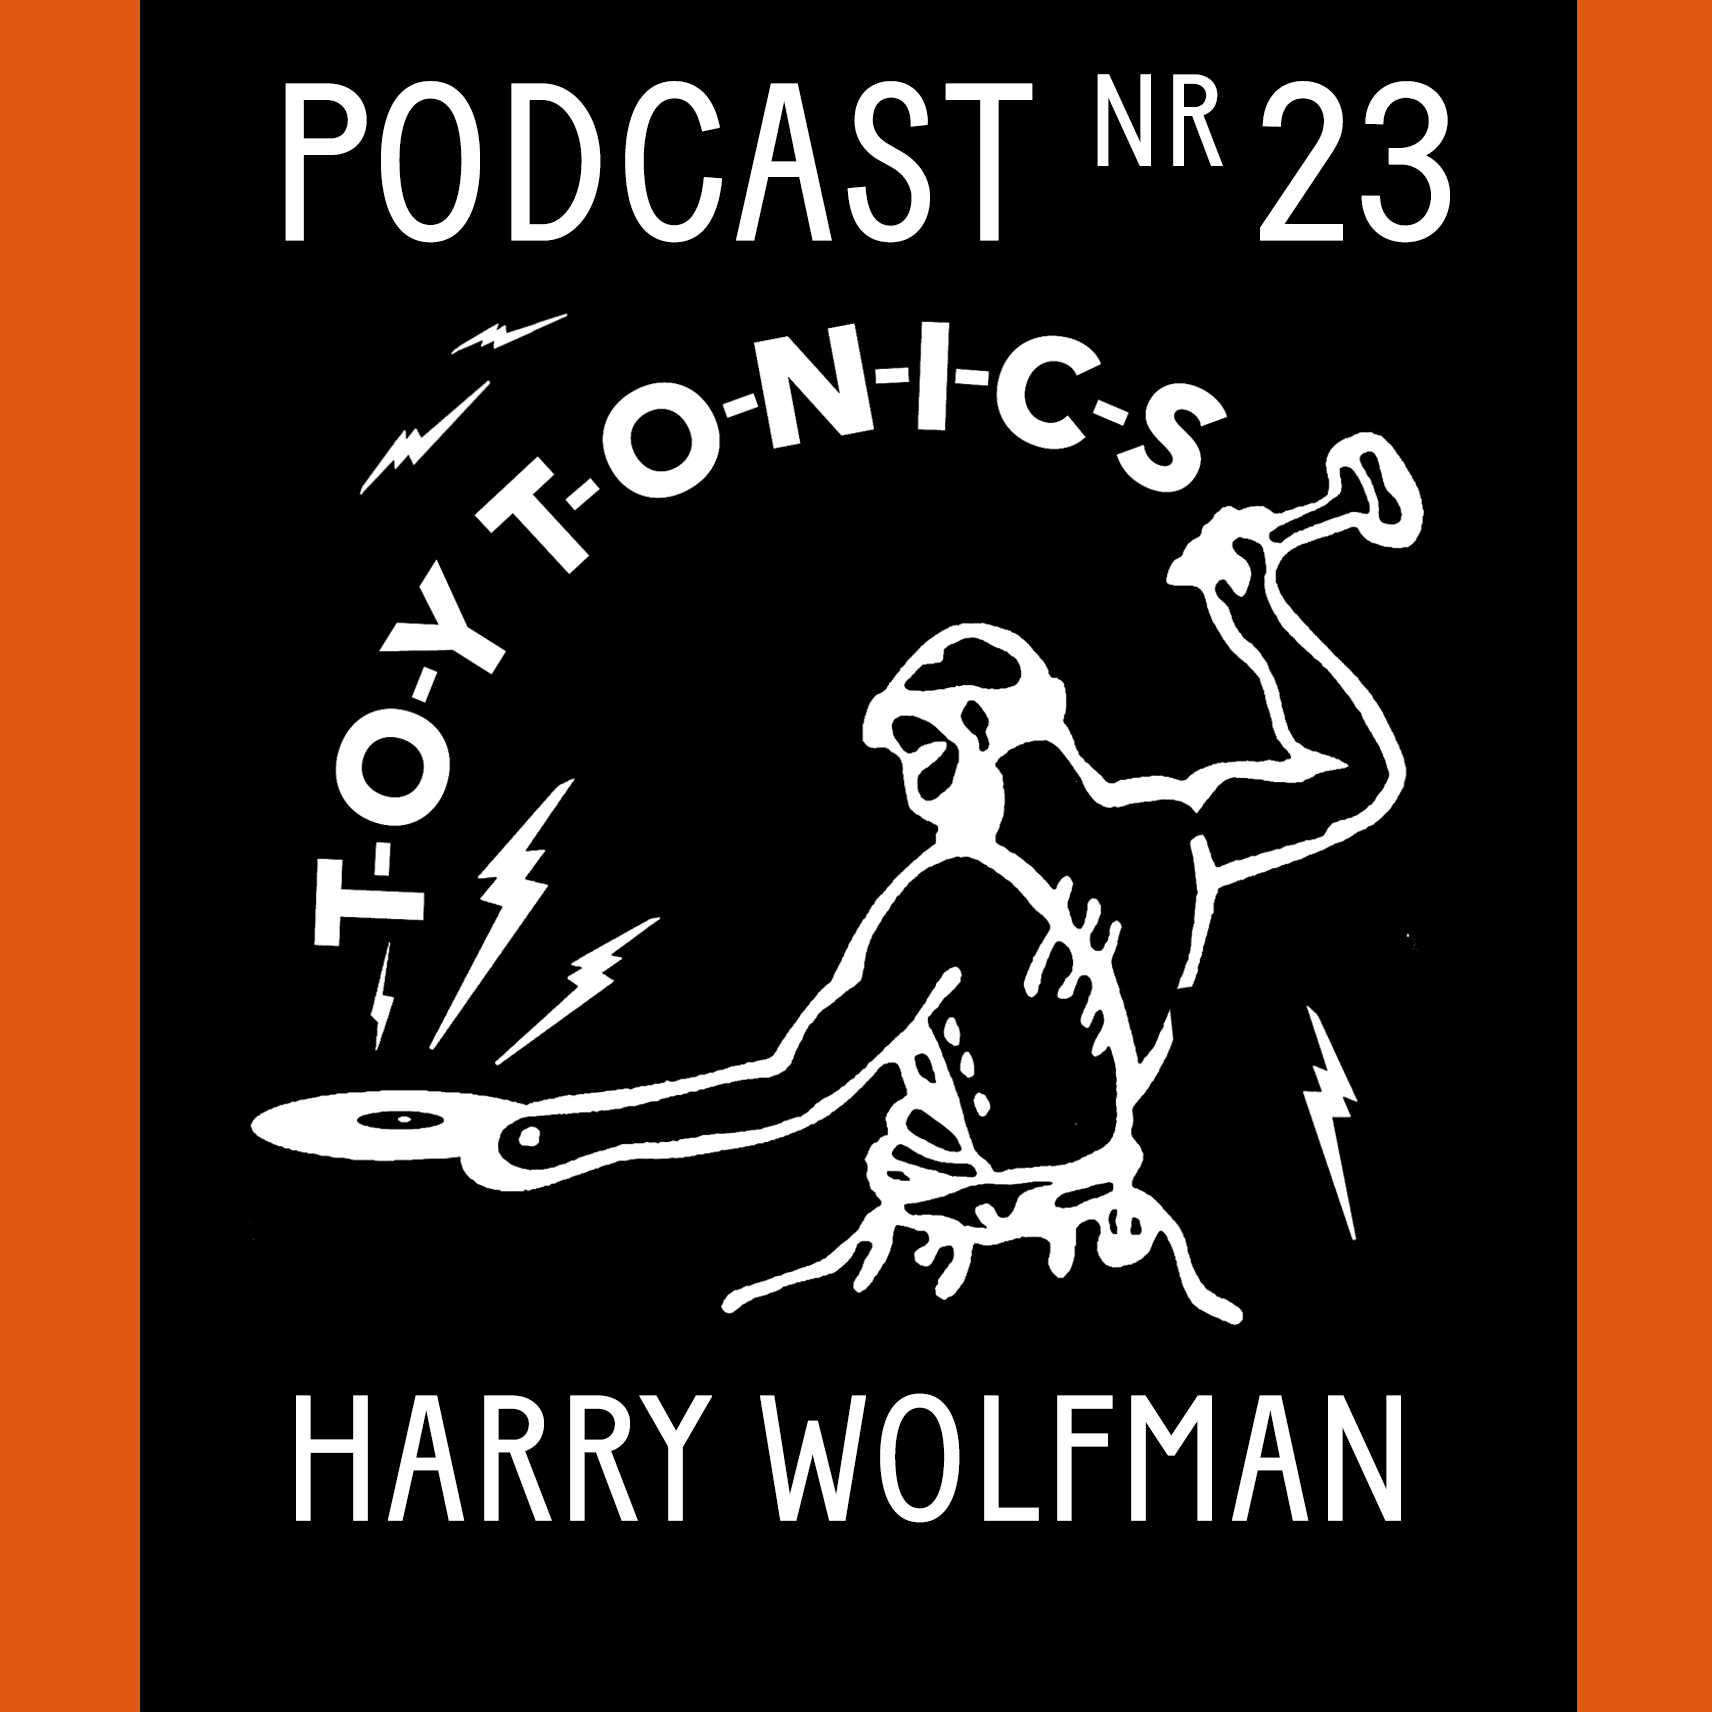 PODCAST NR 23 - Harry Wolfman